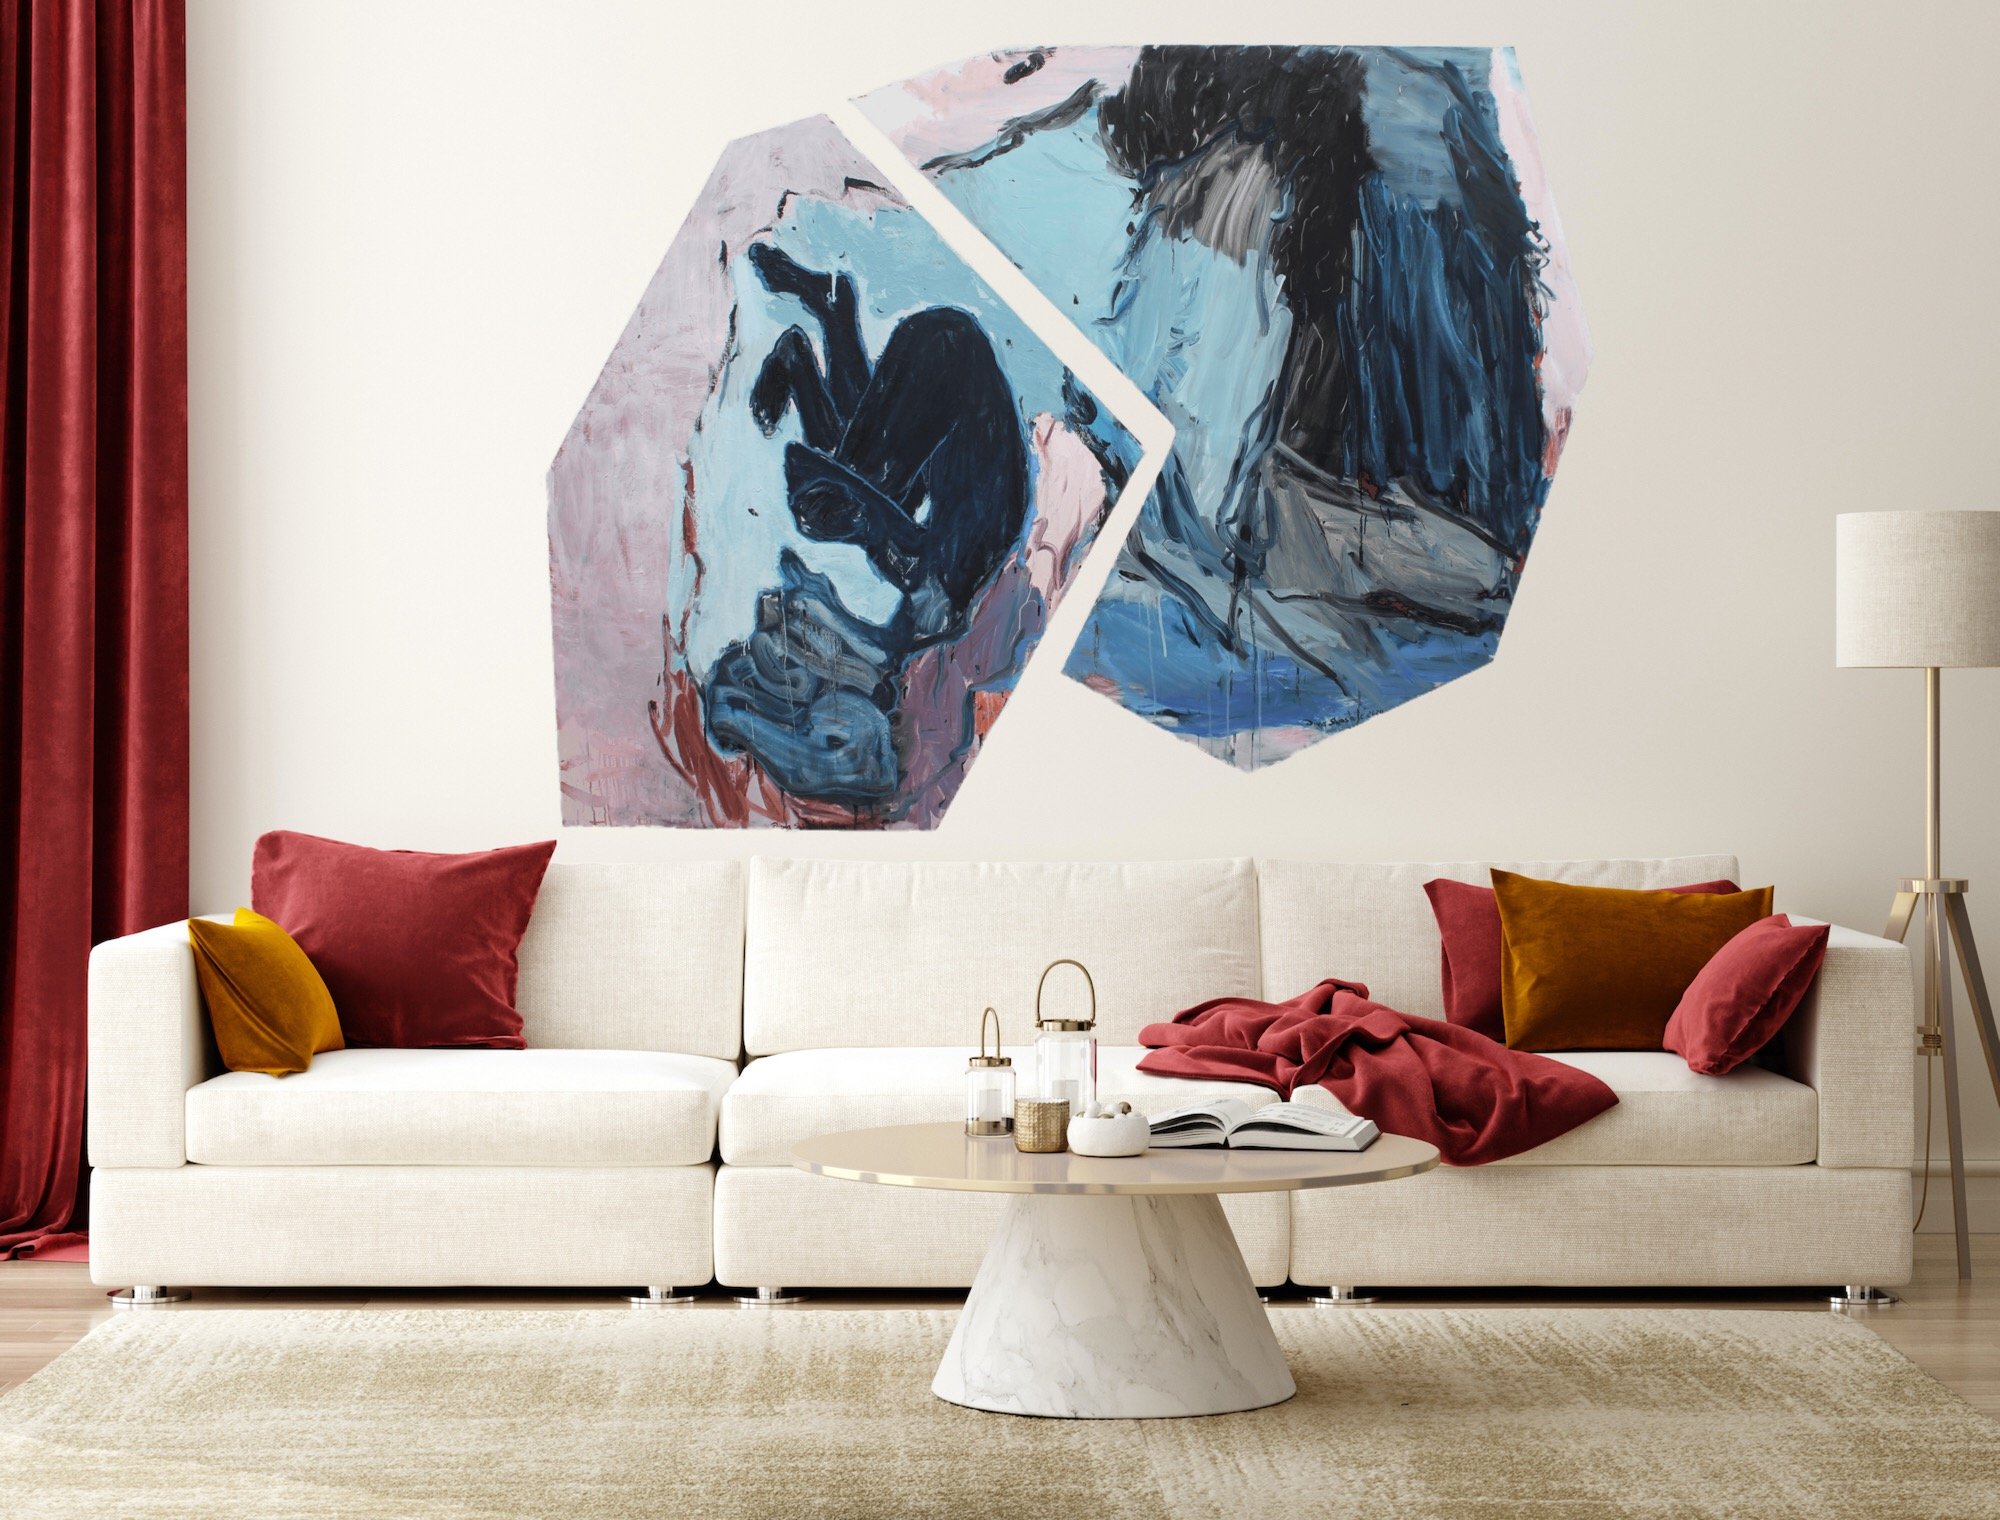 impresive-large-artwork-in-living-room.JPG